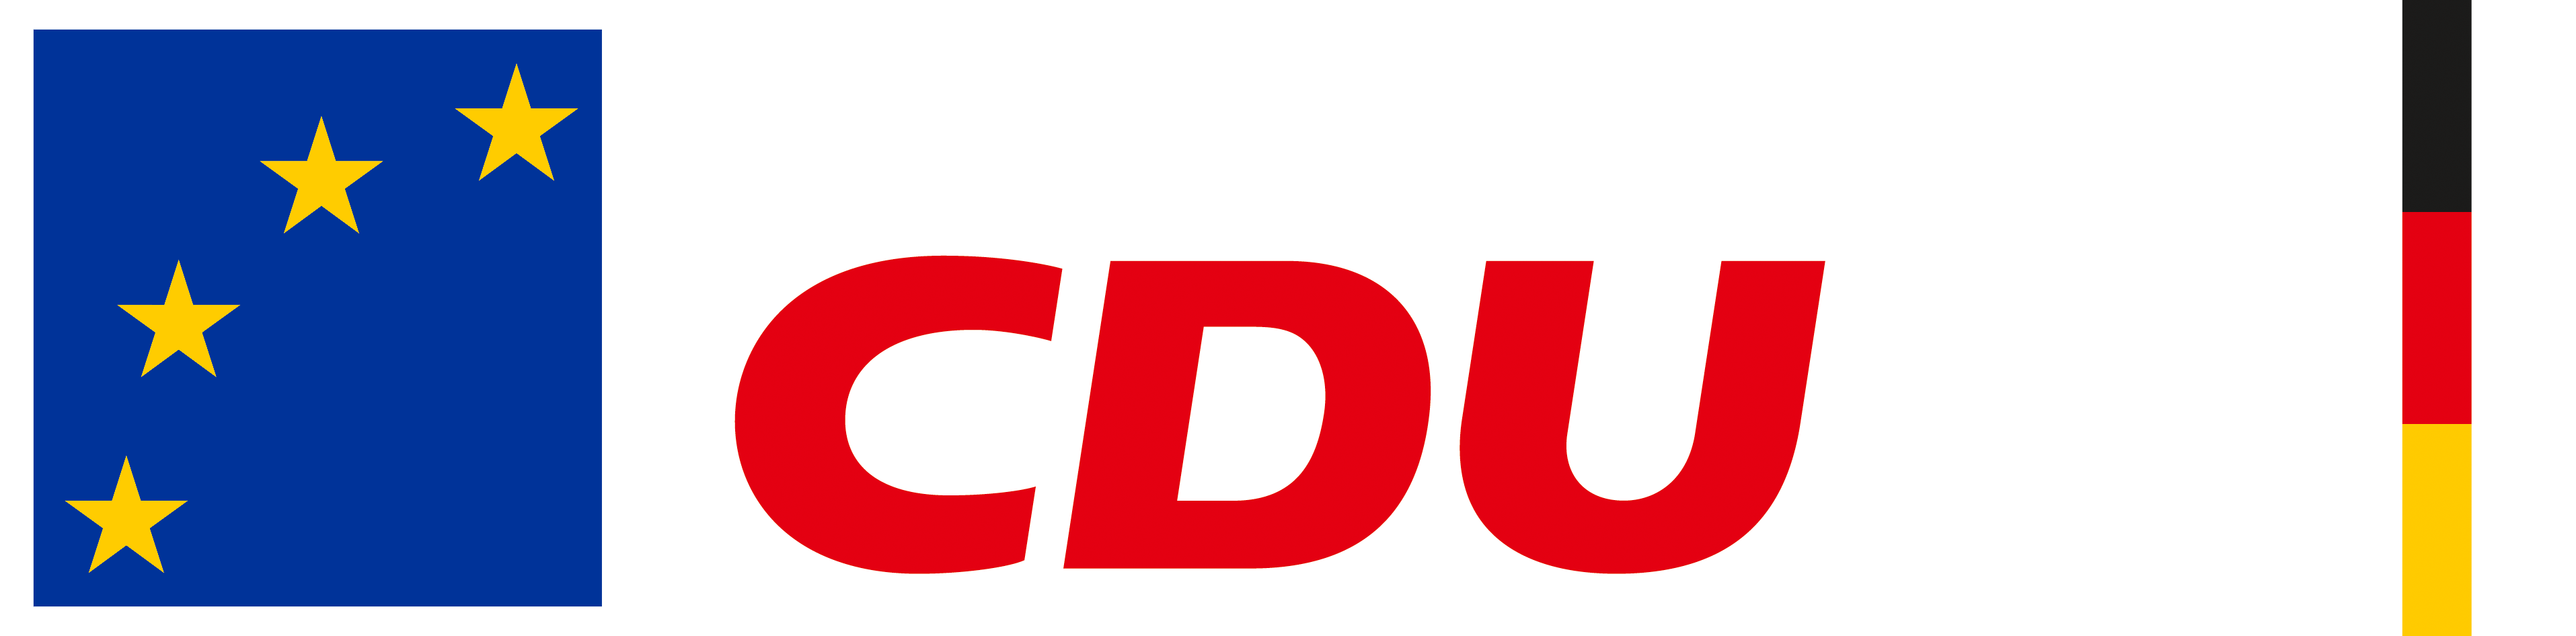 CDU Logo photo - 1